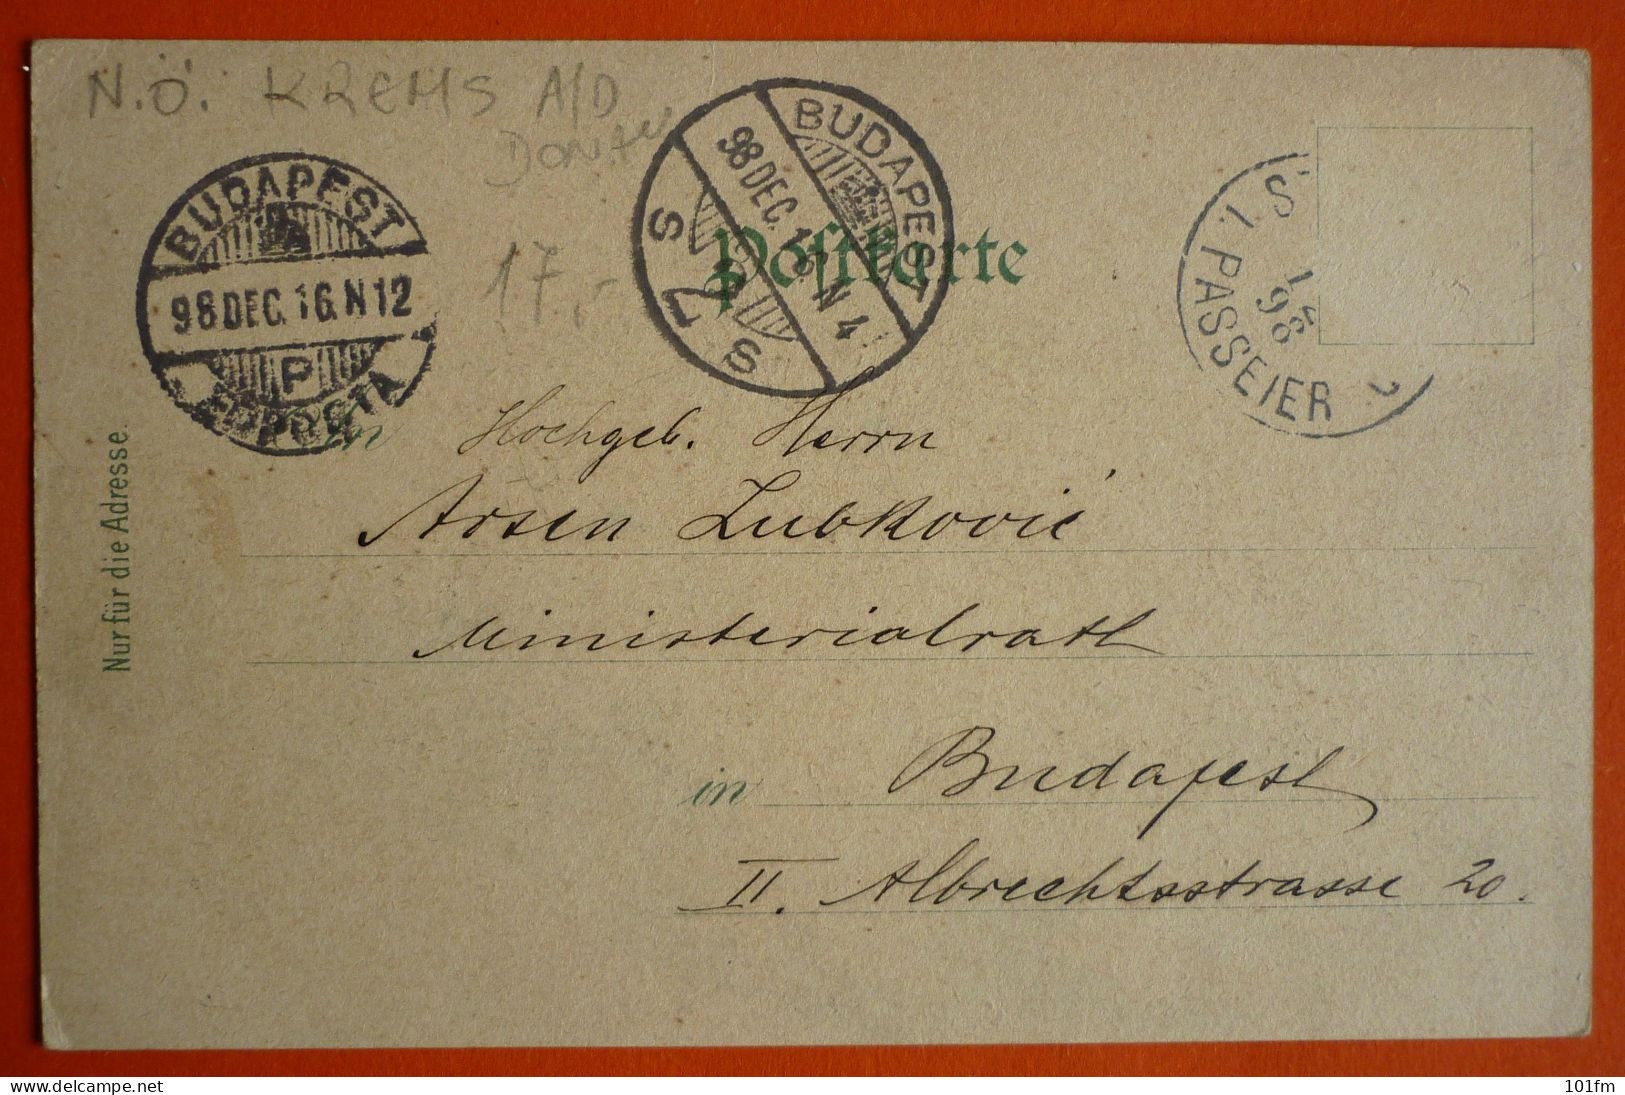 AUSTRIA - GRUSS AUS ST. LAONHARD IM PASSEIER TIROL, OLD LITHO 1898 - Krems An Der Donau